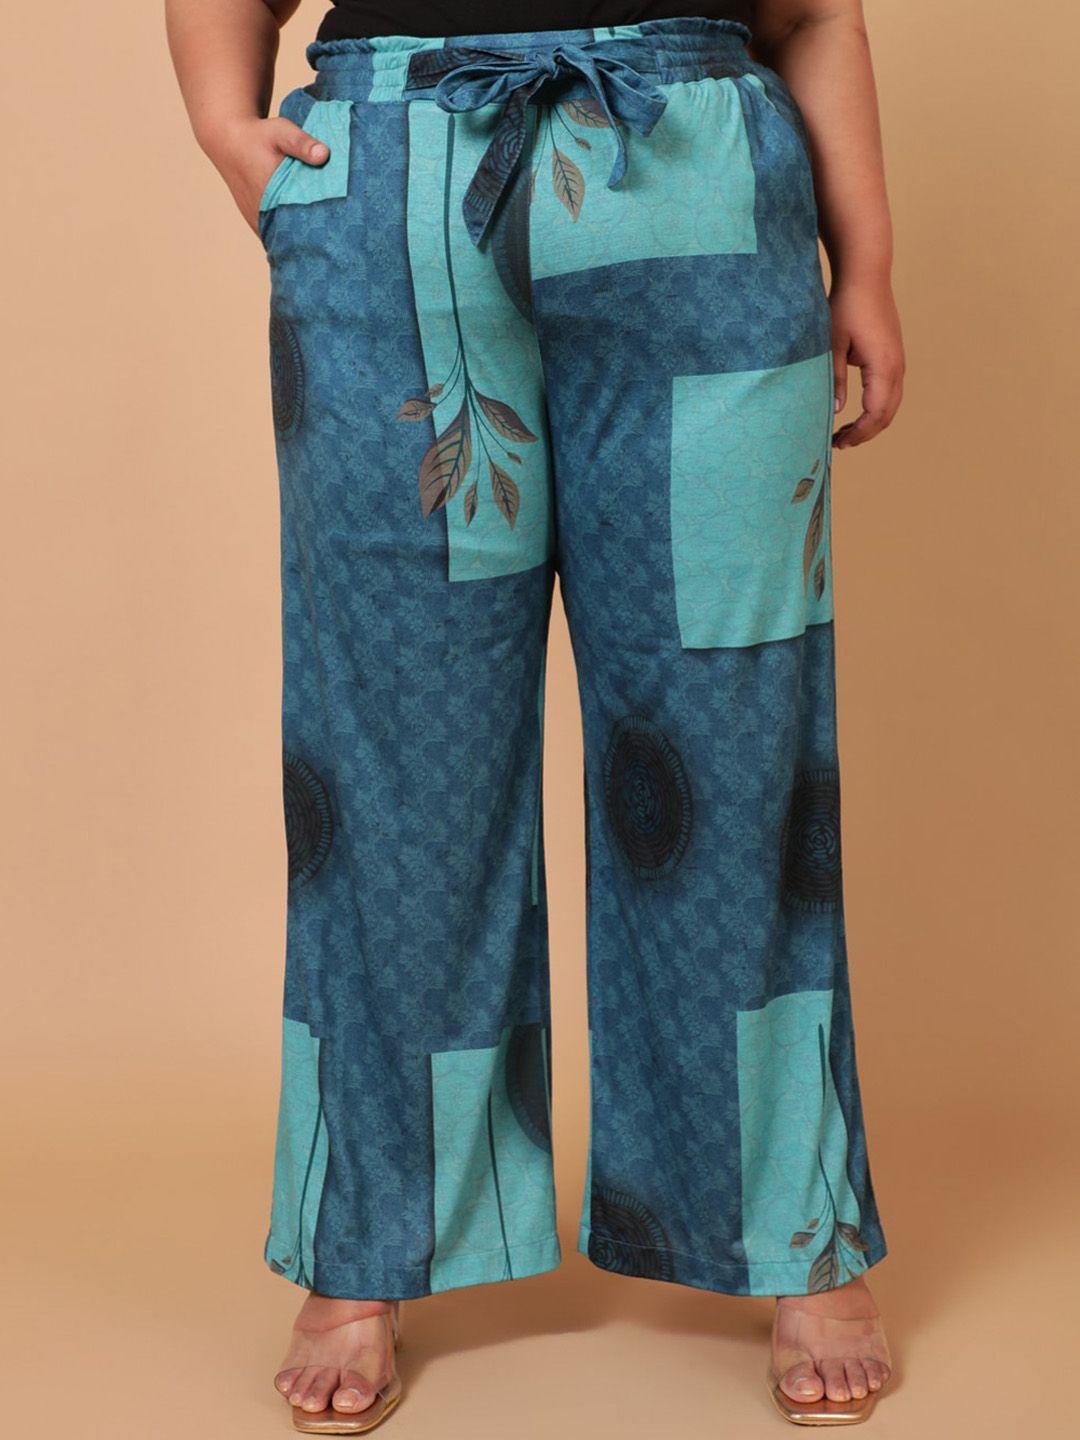 amydus women plus size teal printed trouser